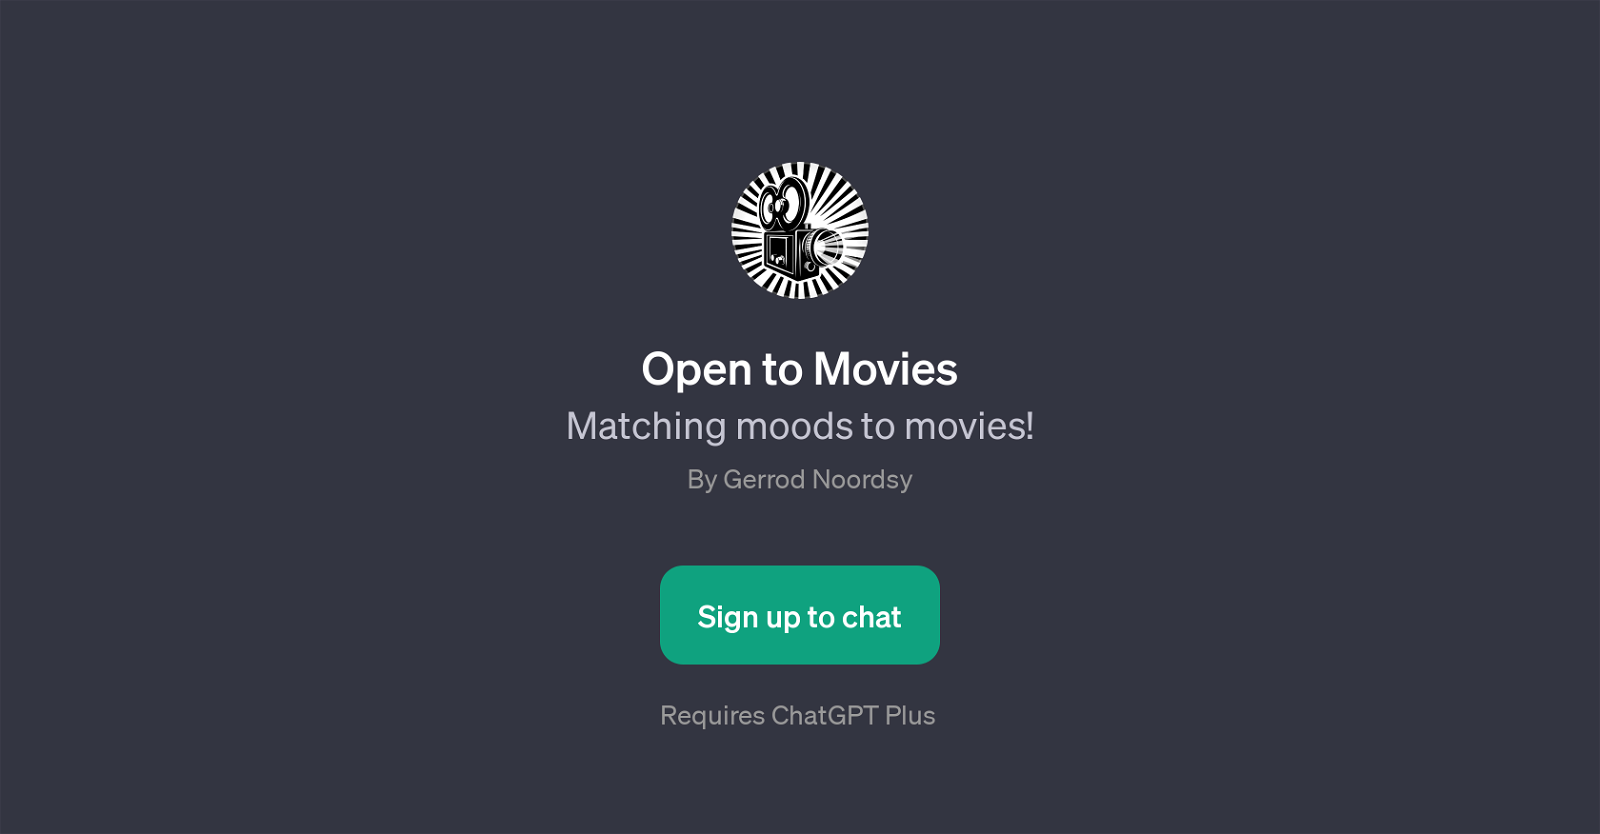 Open to Movies website